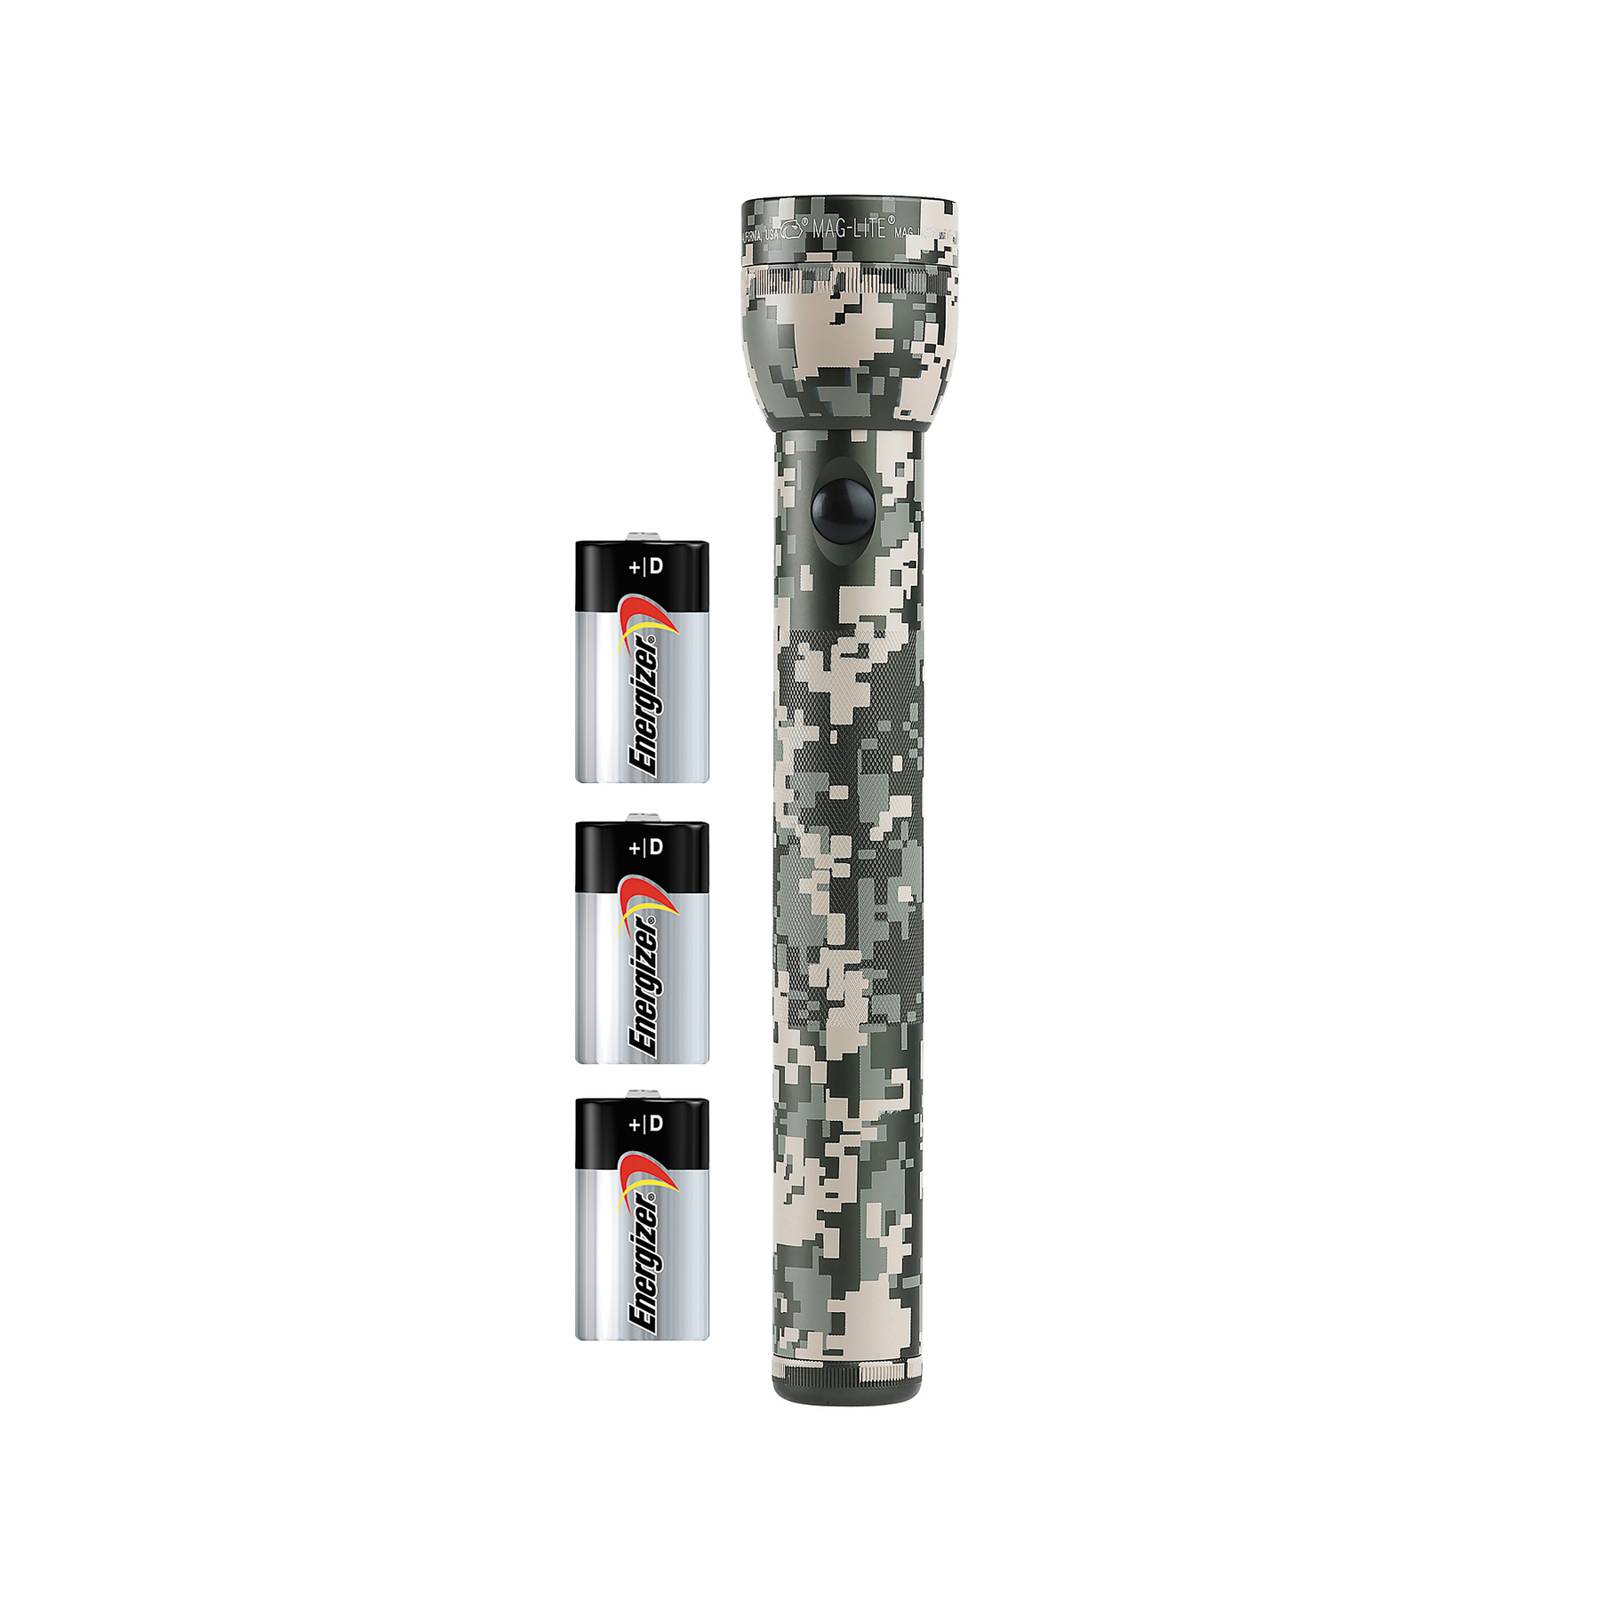 Maglite Lampe de poche au xénon S3DMR, 3-Cell D, Box, Camouflage